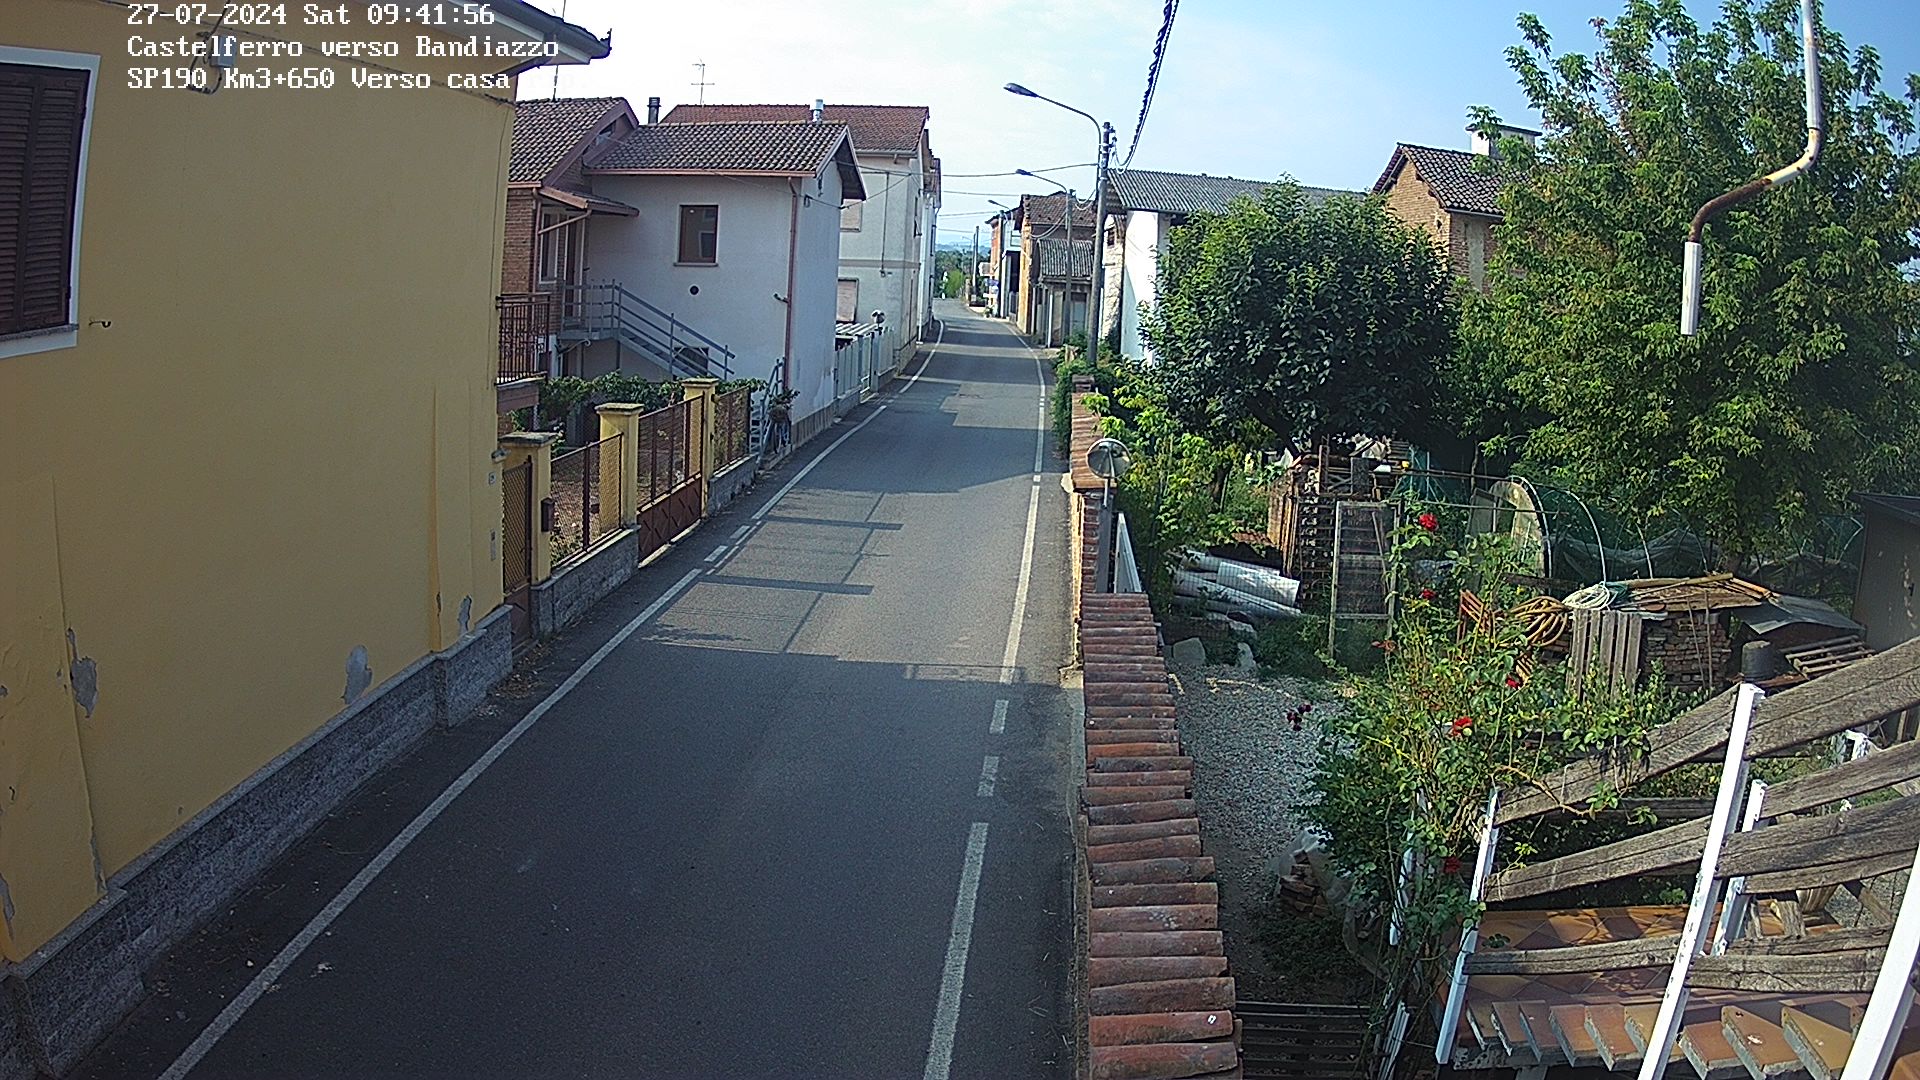 Immagine Webcam Castelferro